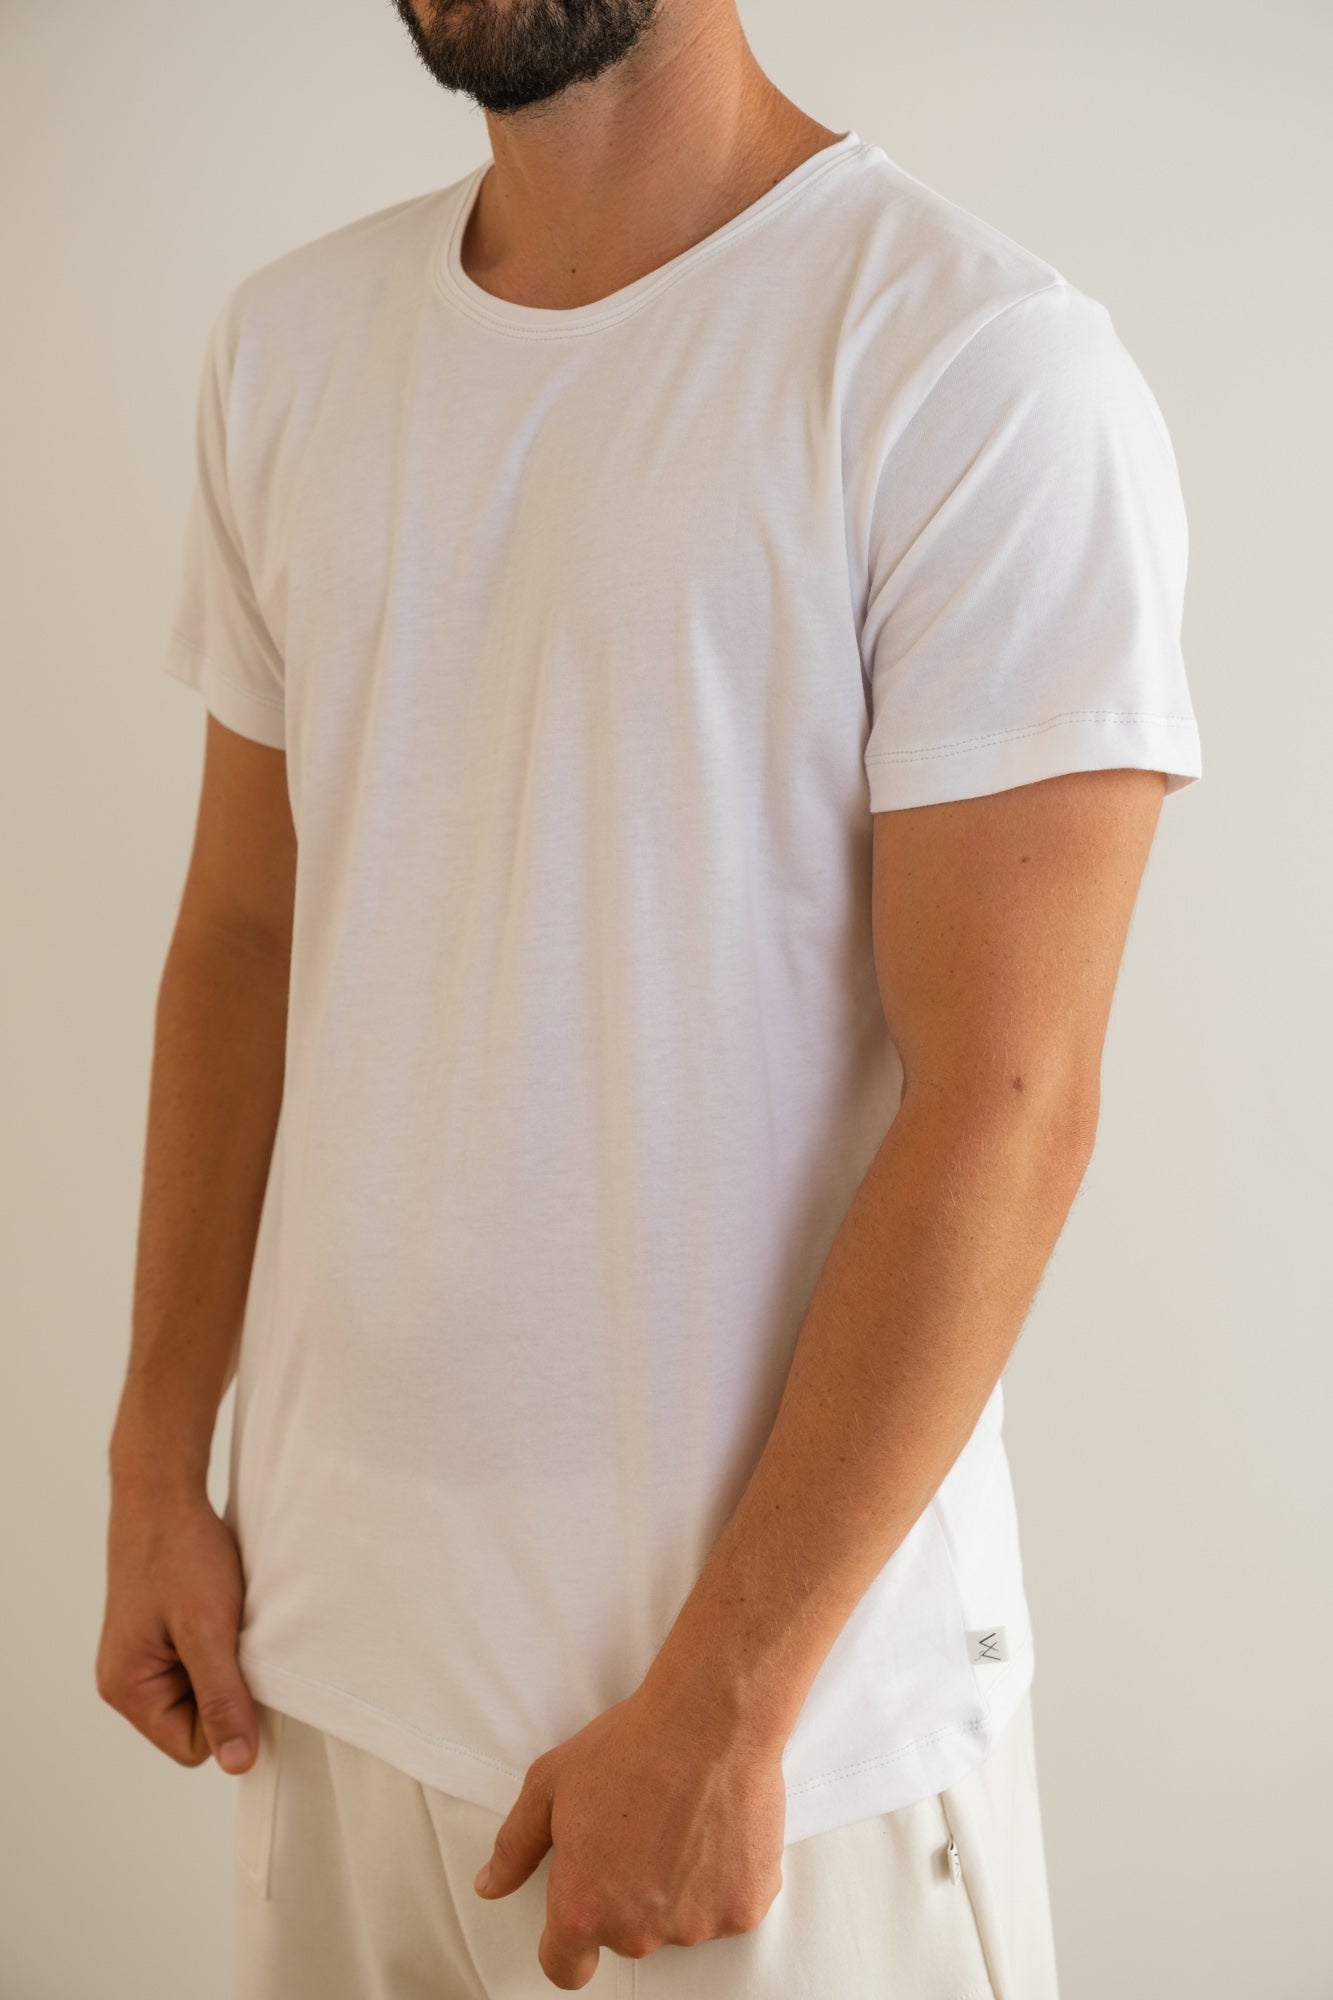 MIA Moda Regenerativa Camisetas L Camiseta Esencial hombre - blanco